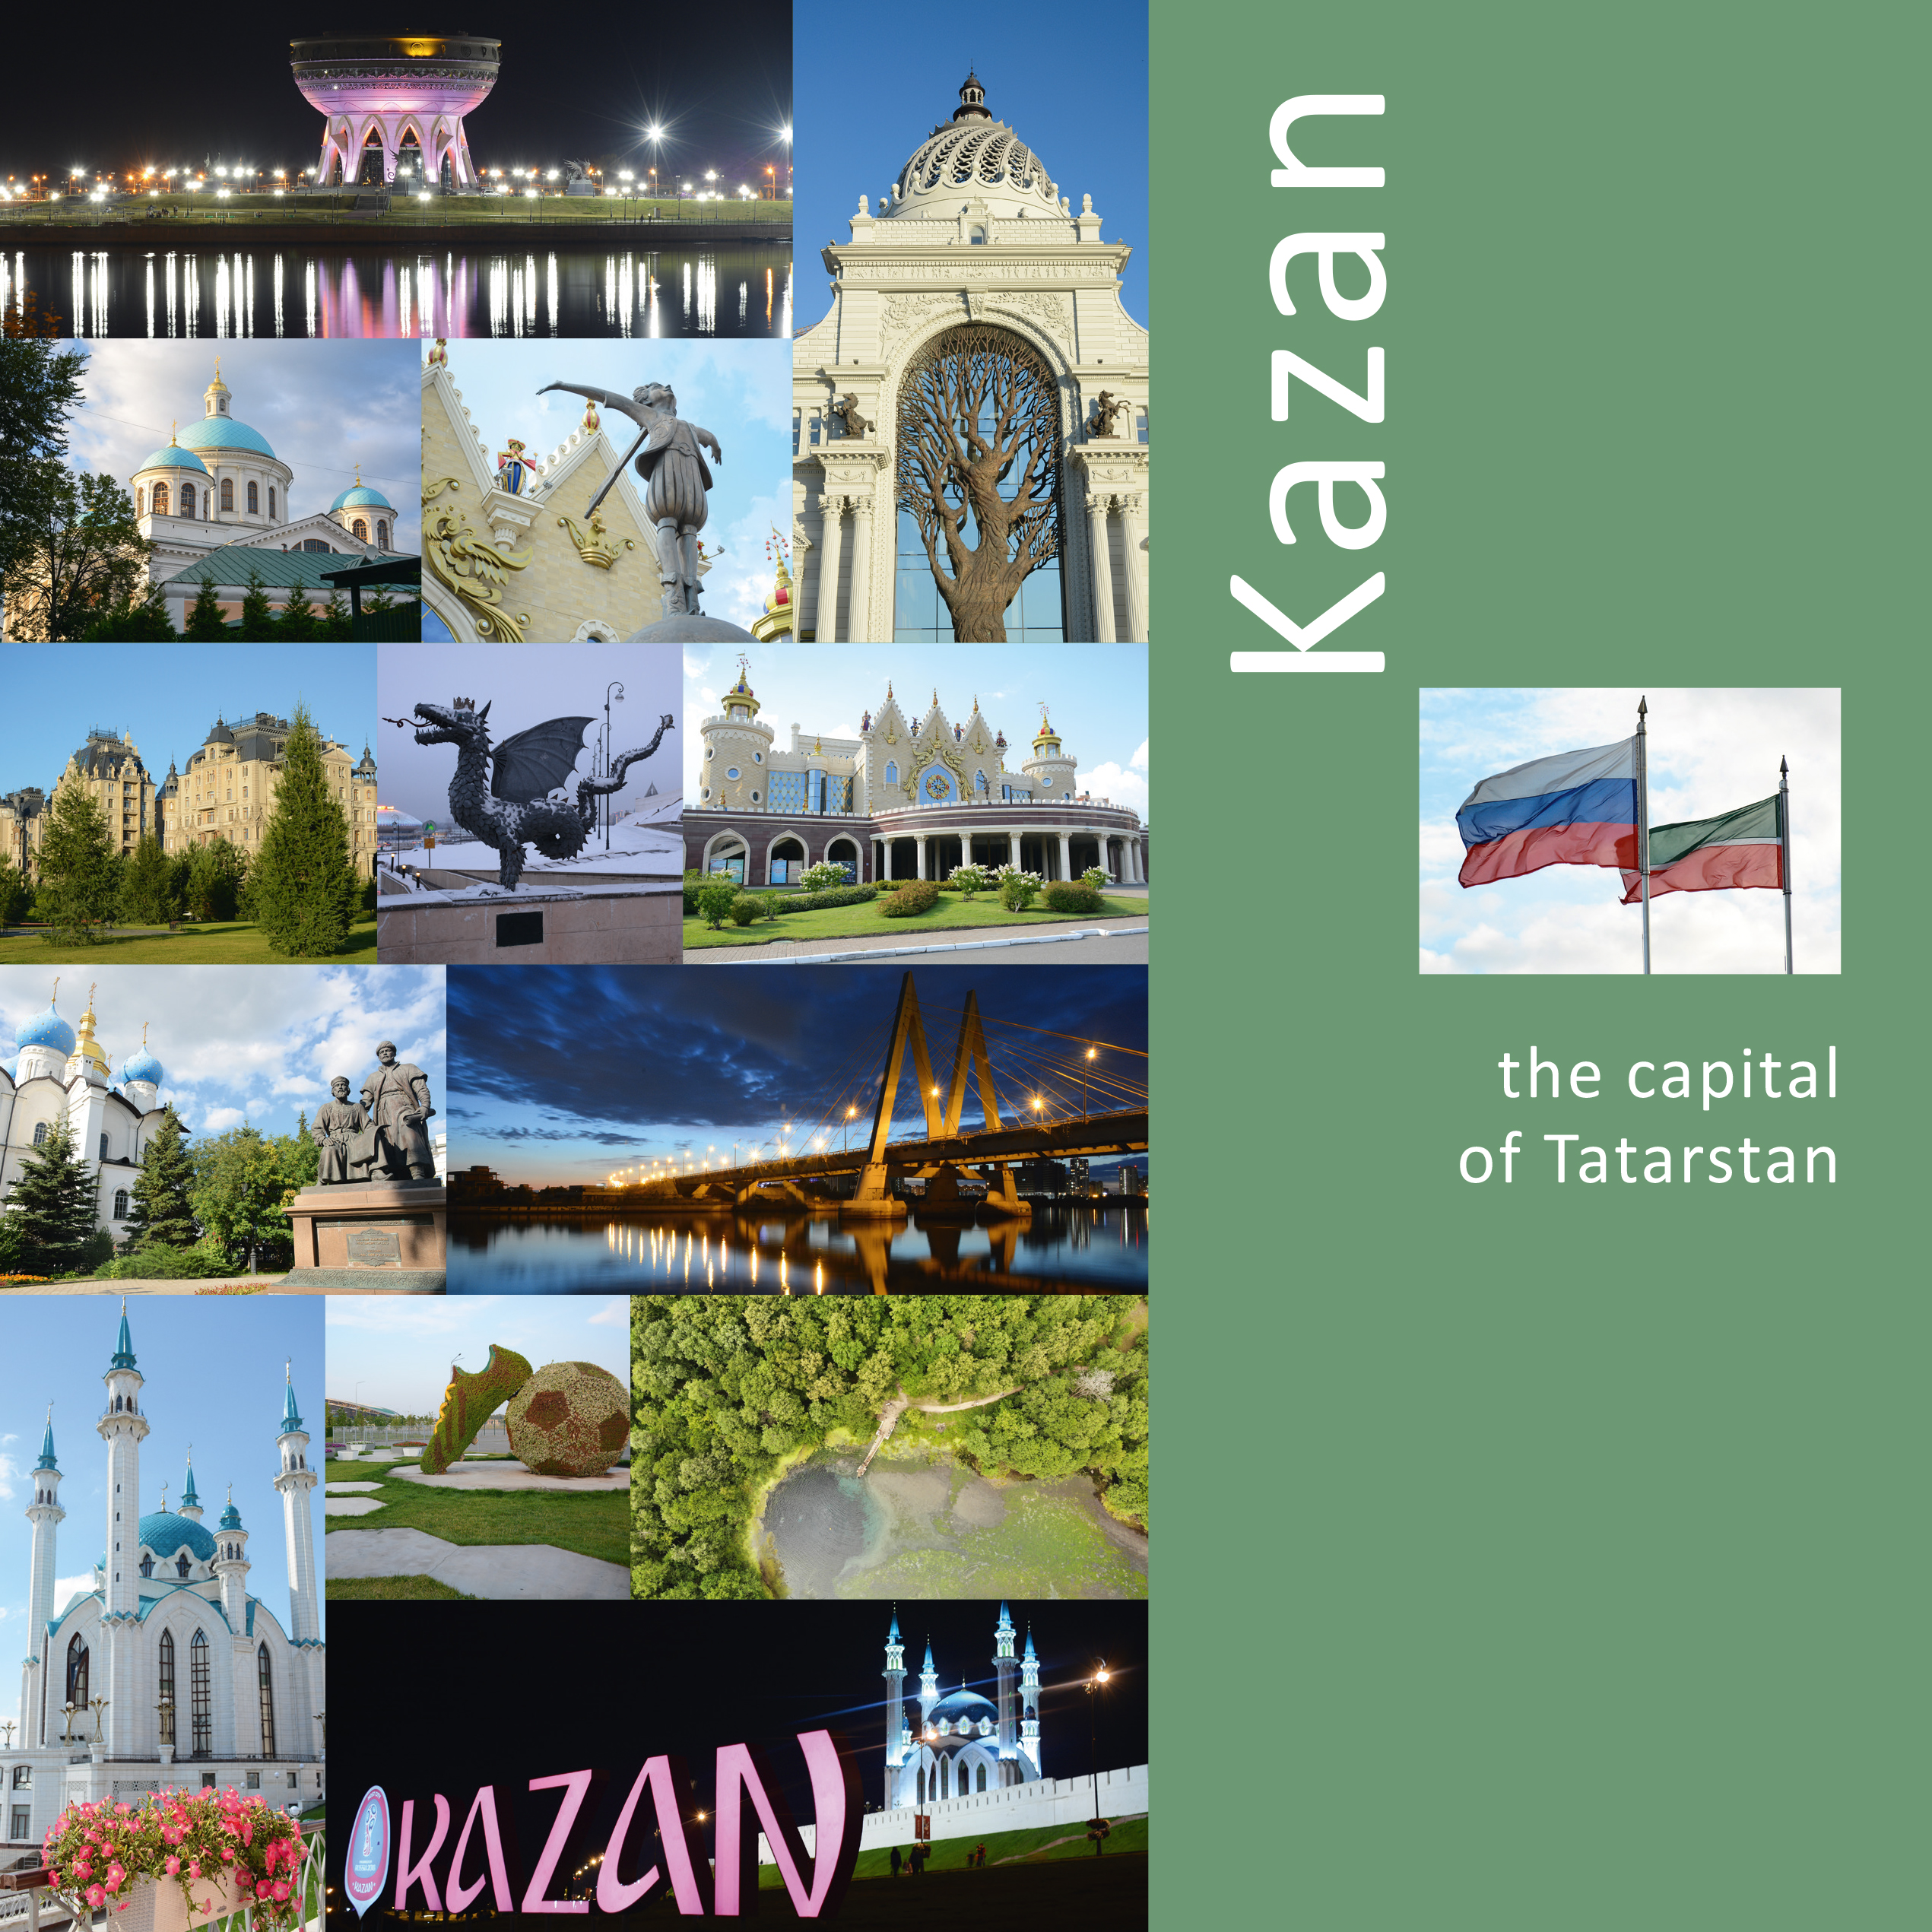 Kazan: The Capital of Tatarstan